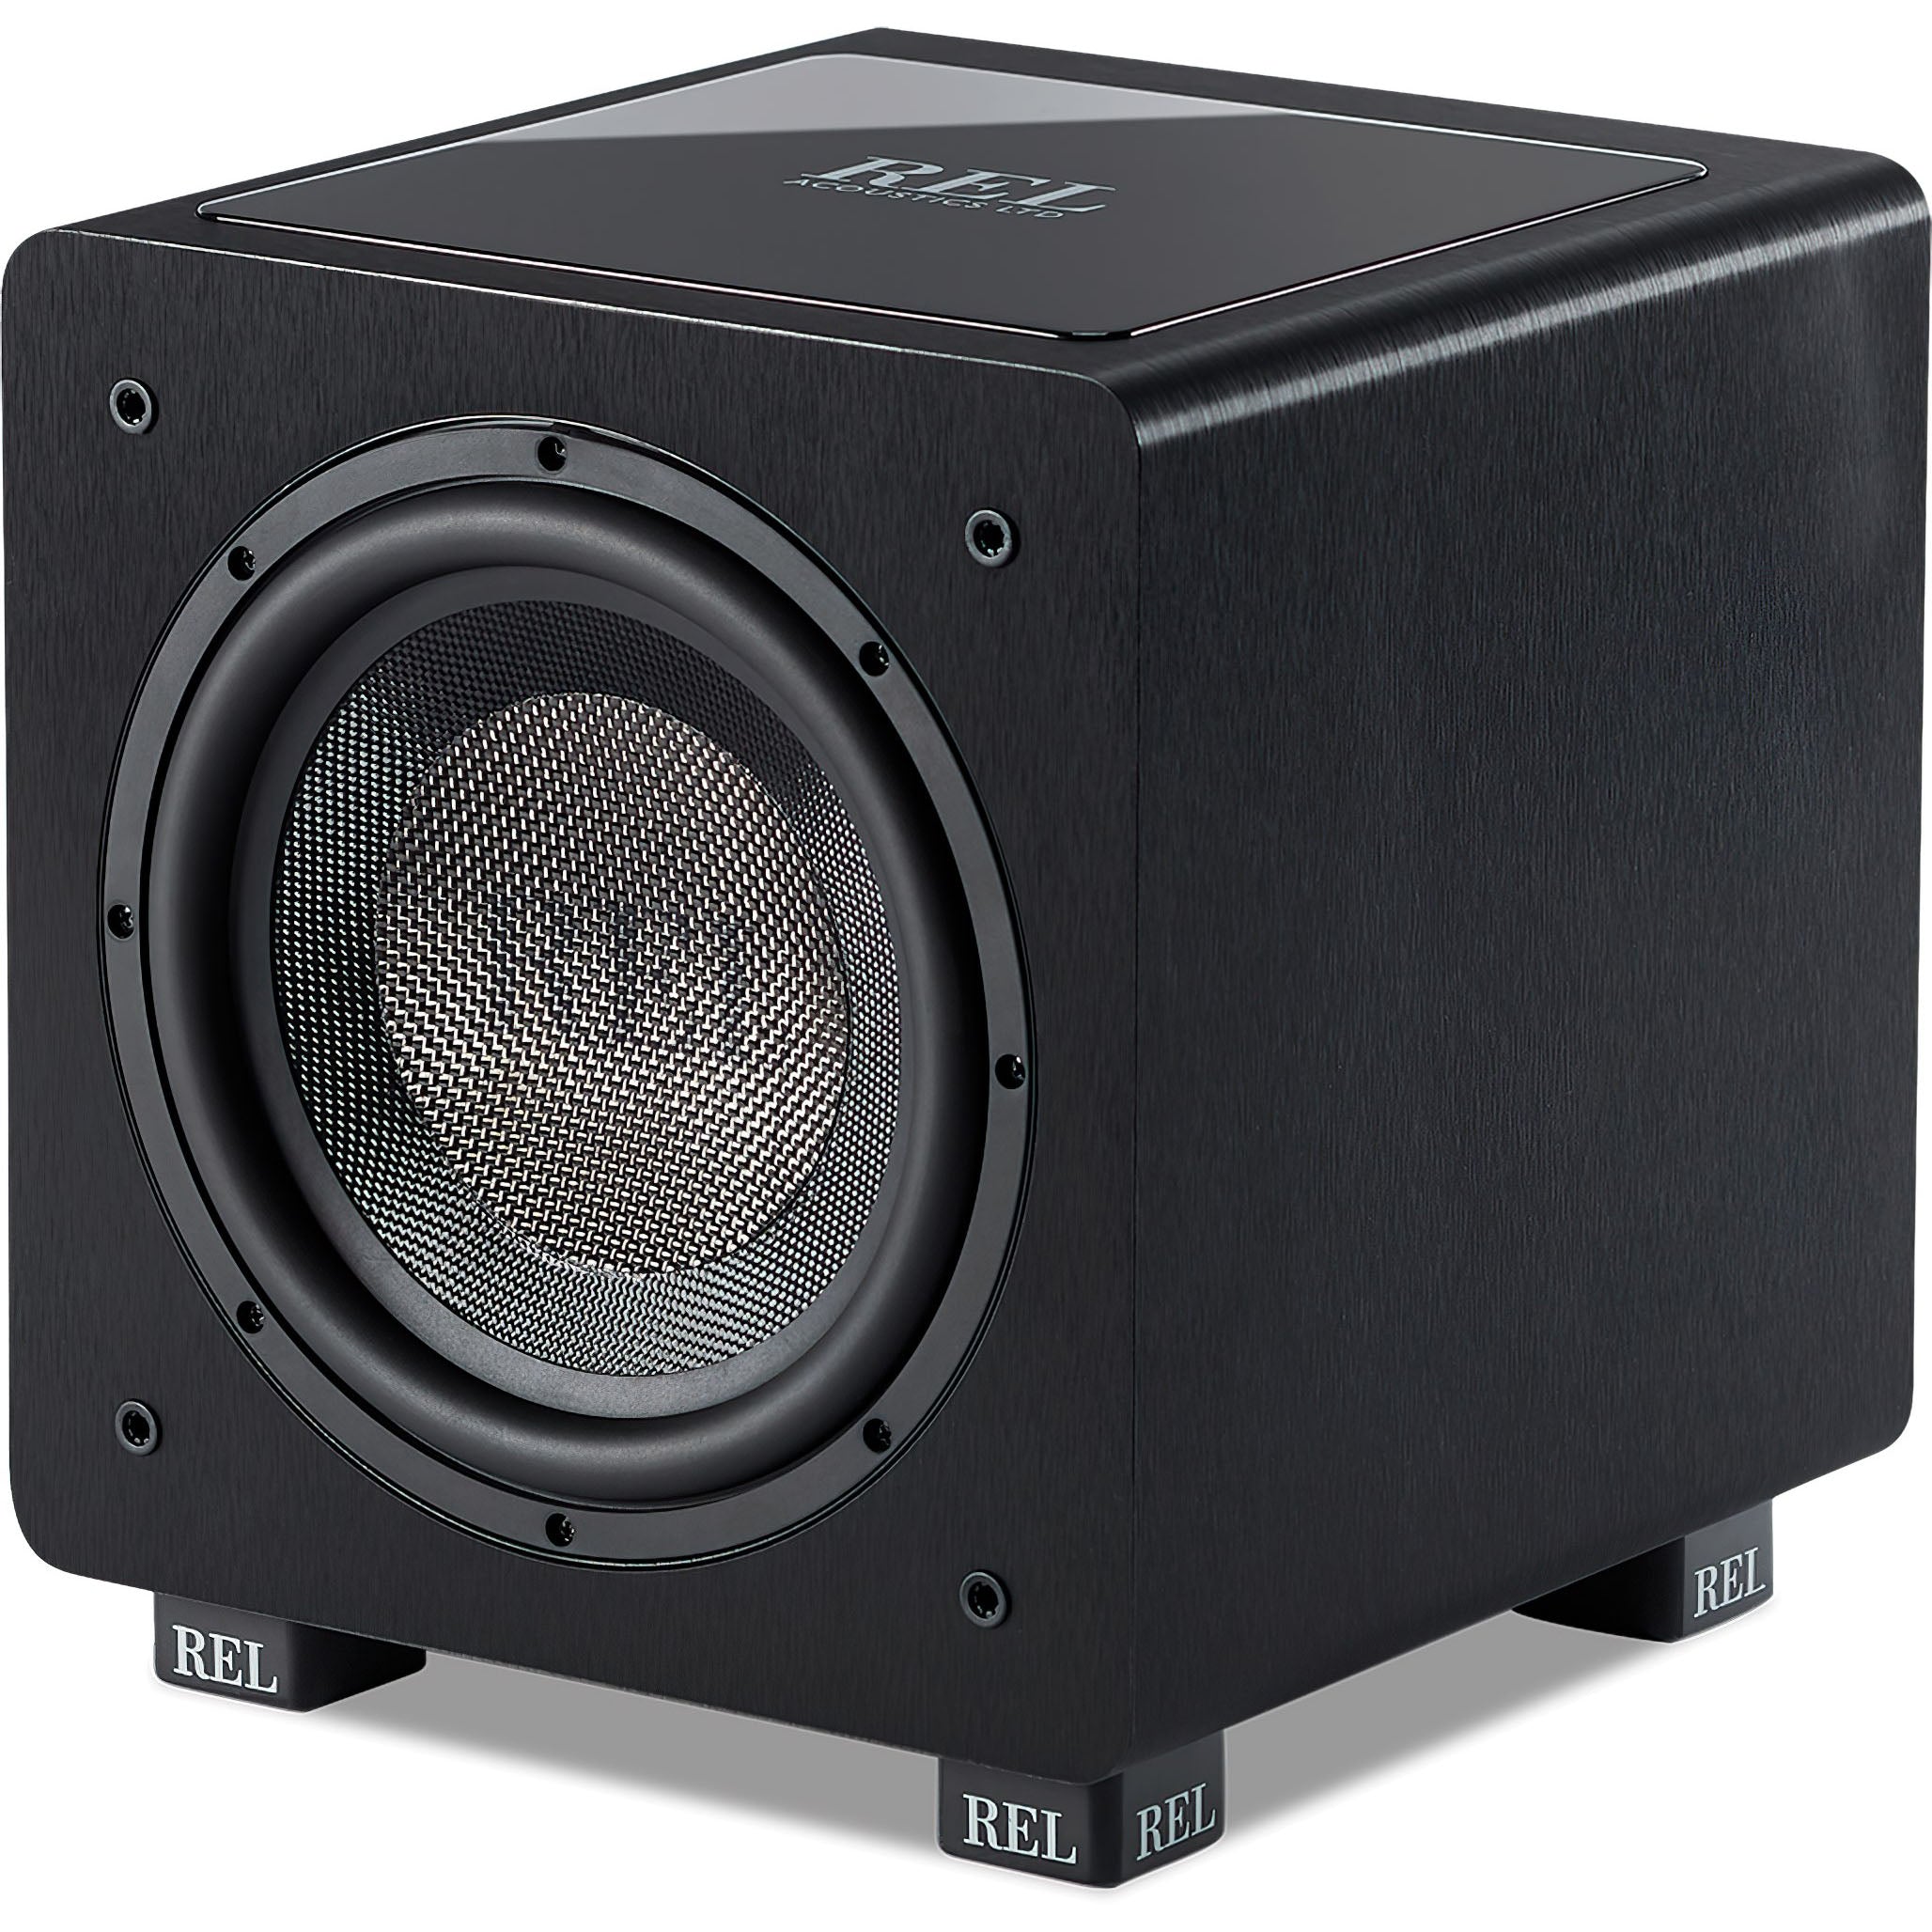 REL Acoustics HT/1003 - 300 Watt Subwoofer for Home Theater